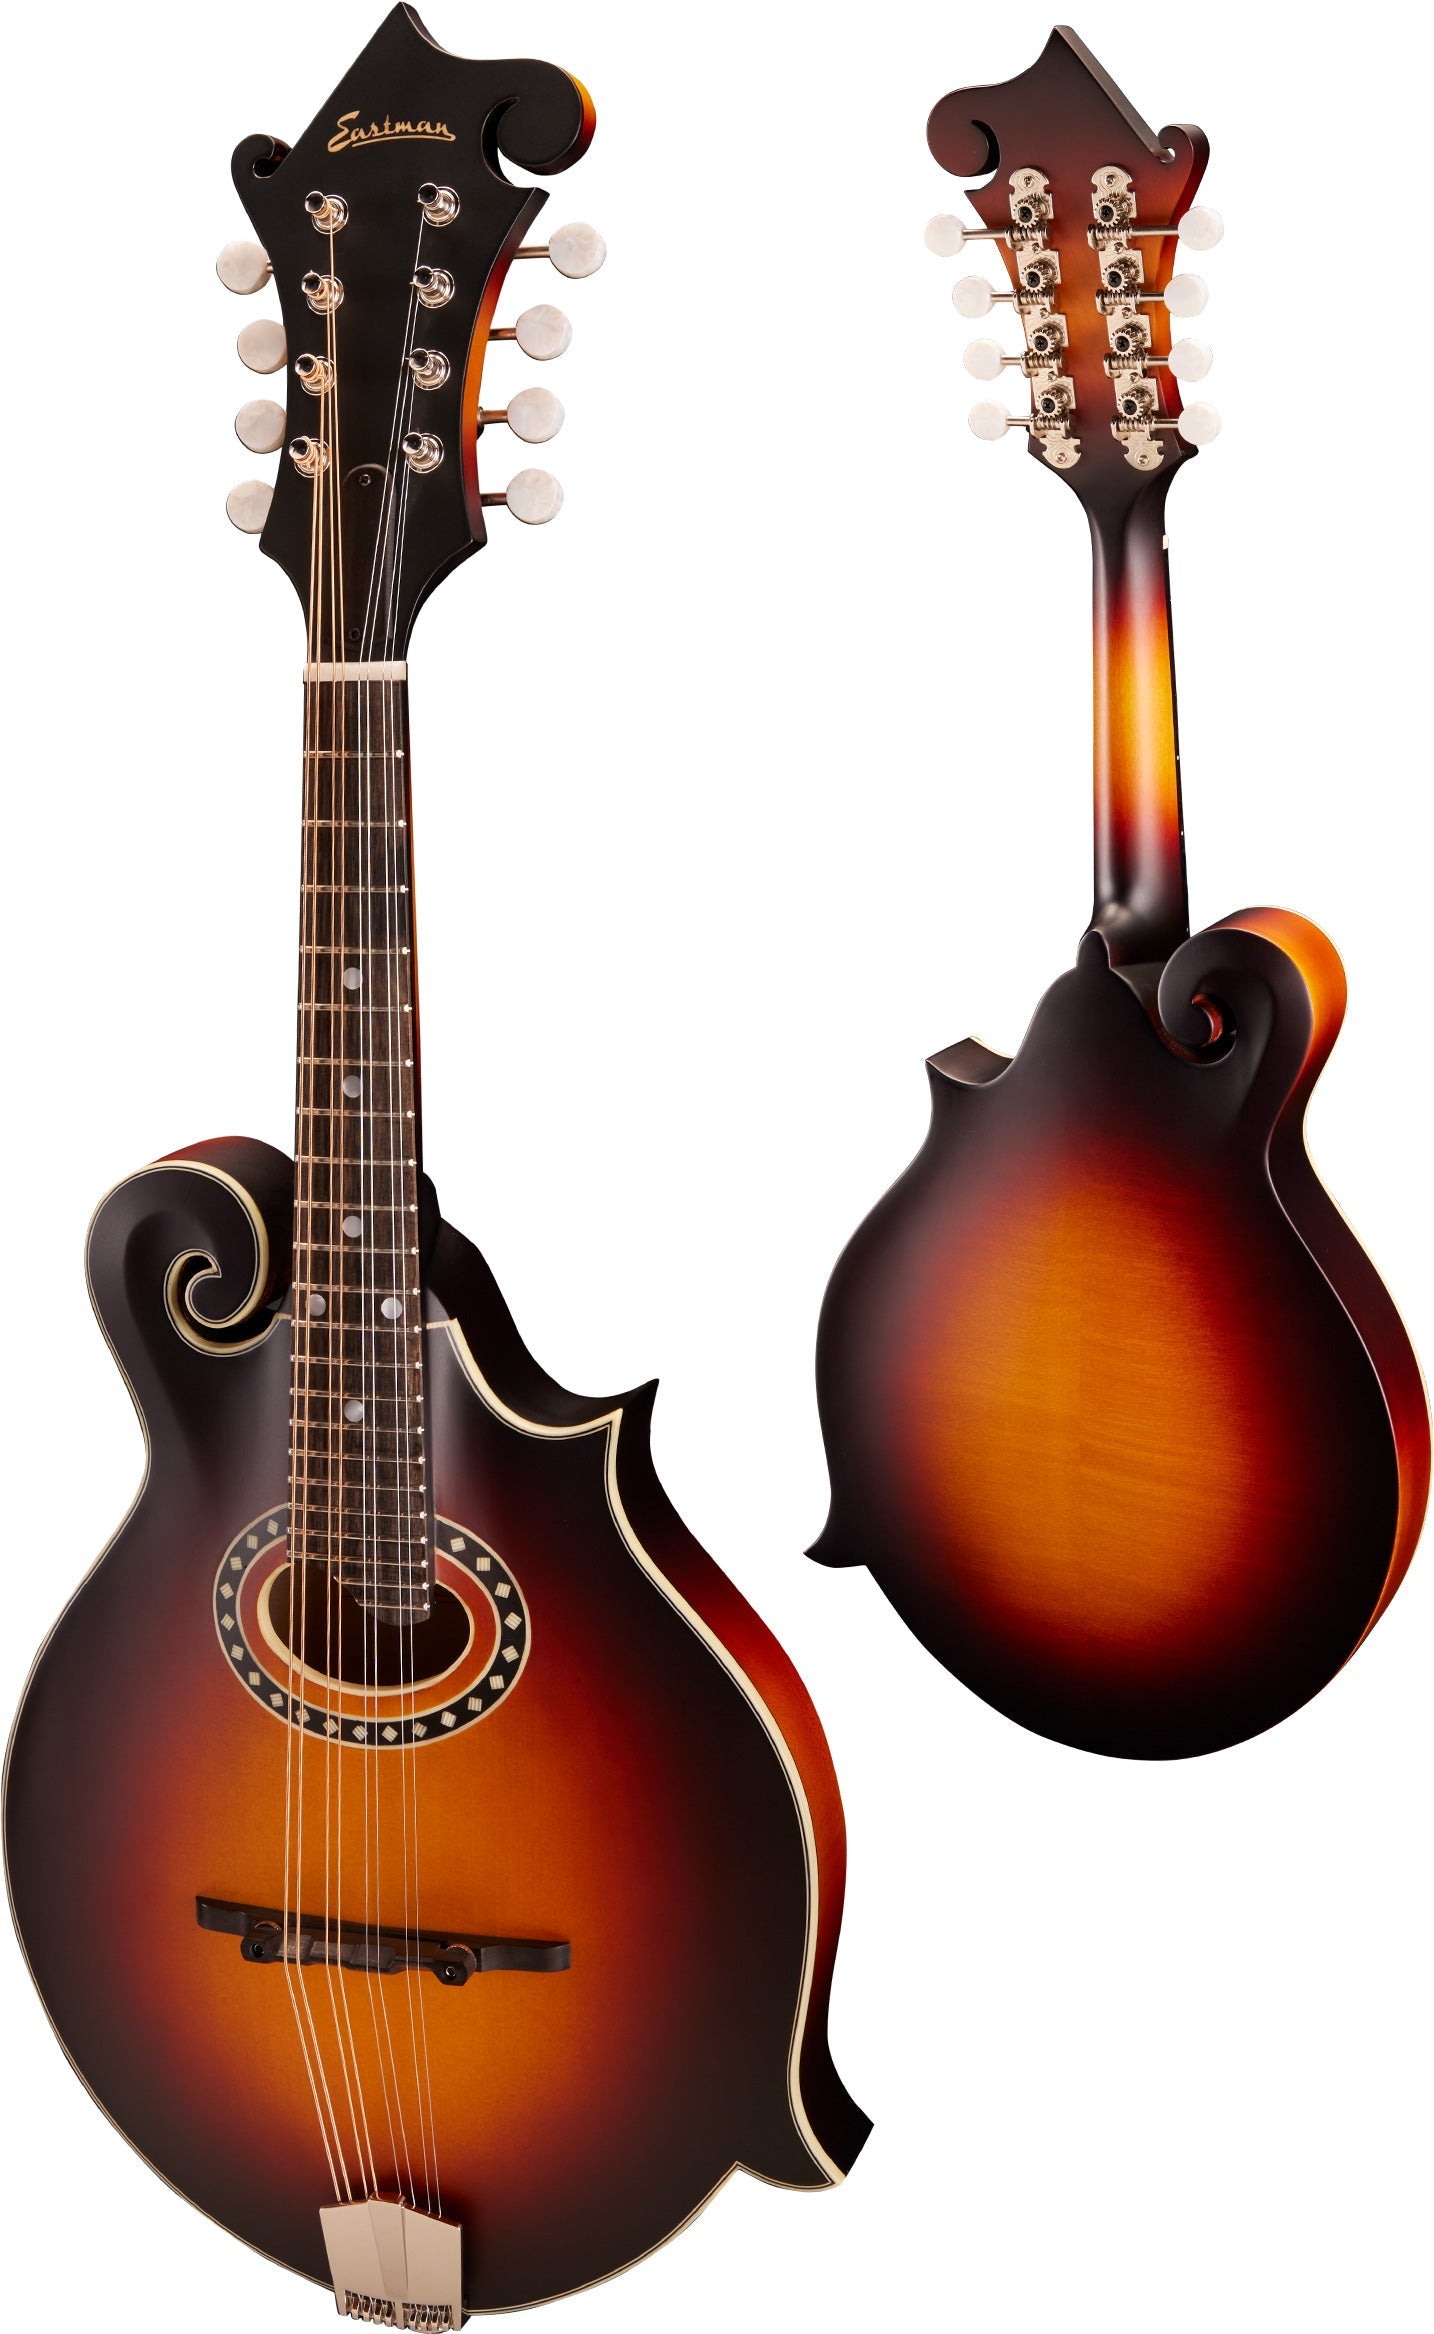 Eastman MD314E-SB F-style oval hole Mandolin, Mandolin for sale at Richards Guitars.